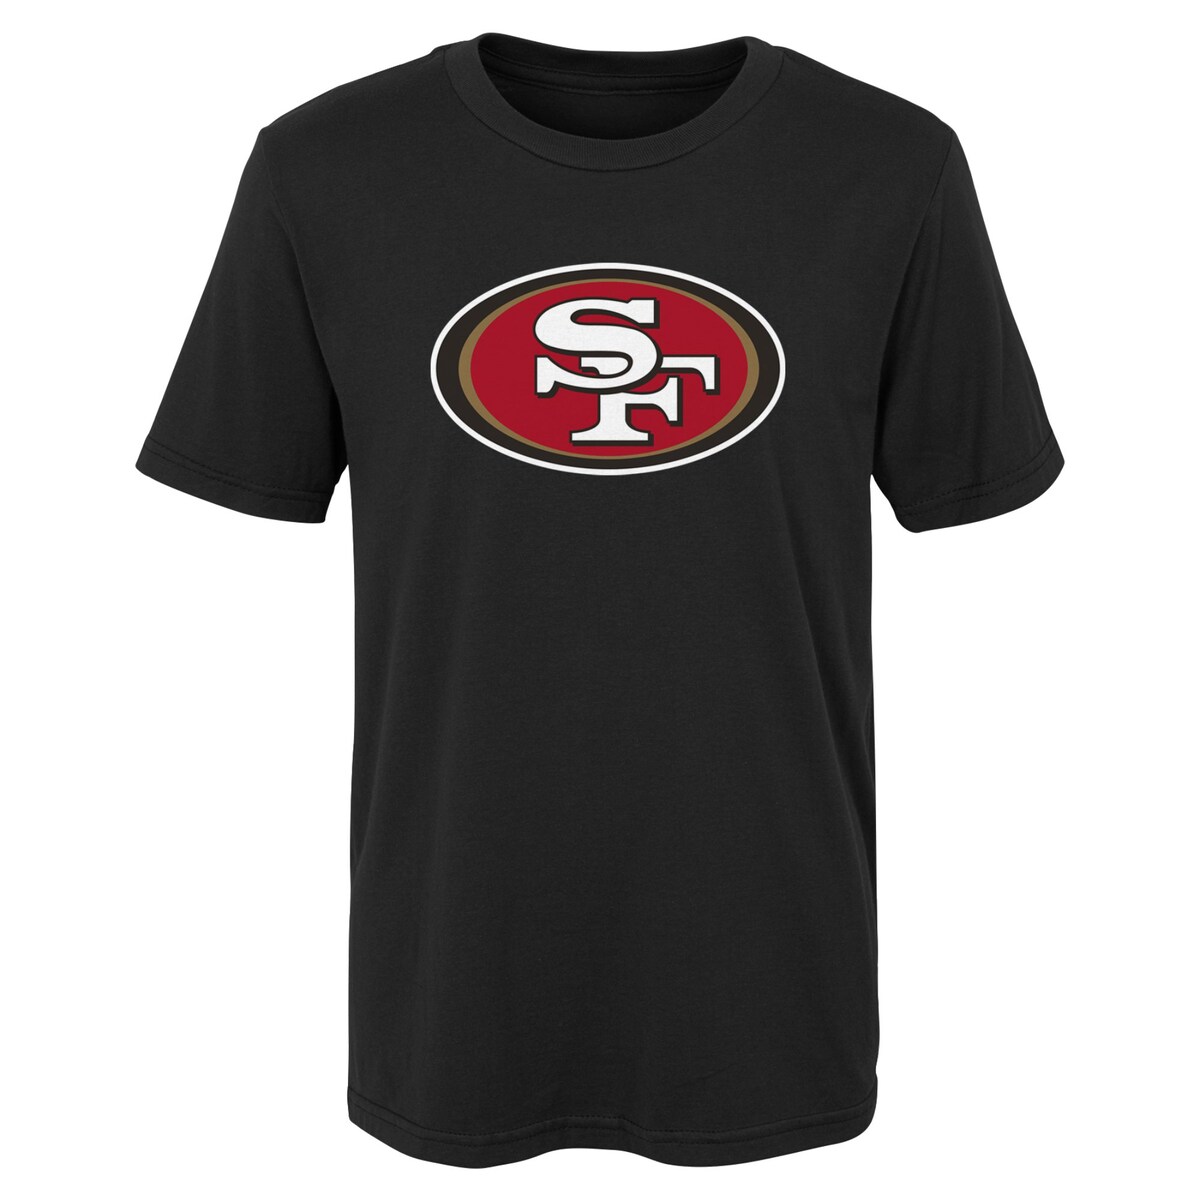 NFL 49ers Tシャツ ロゴ入